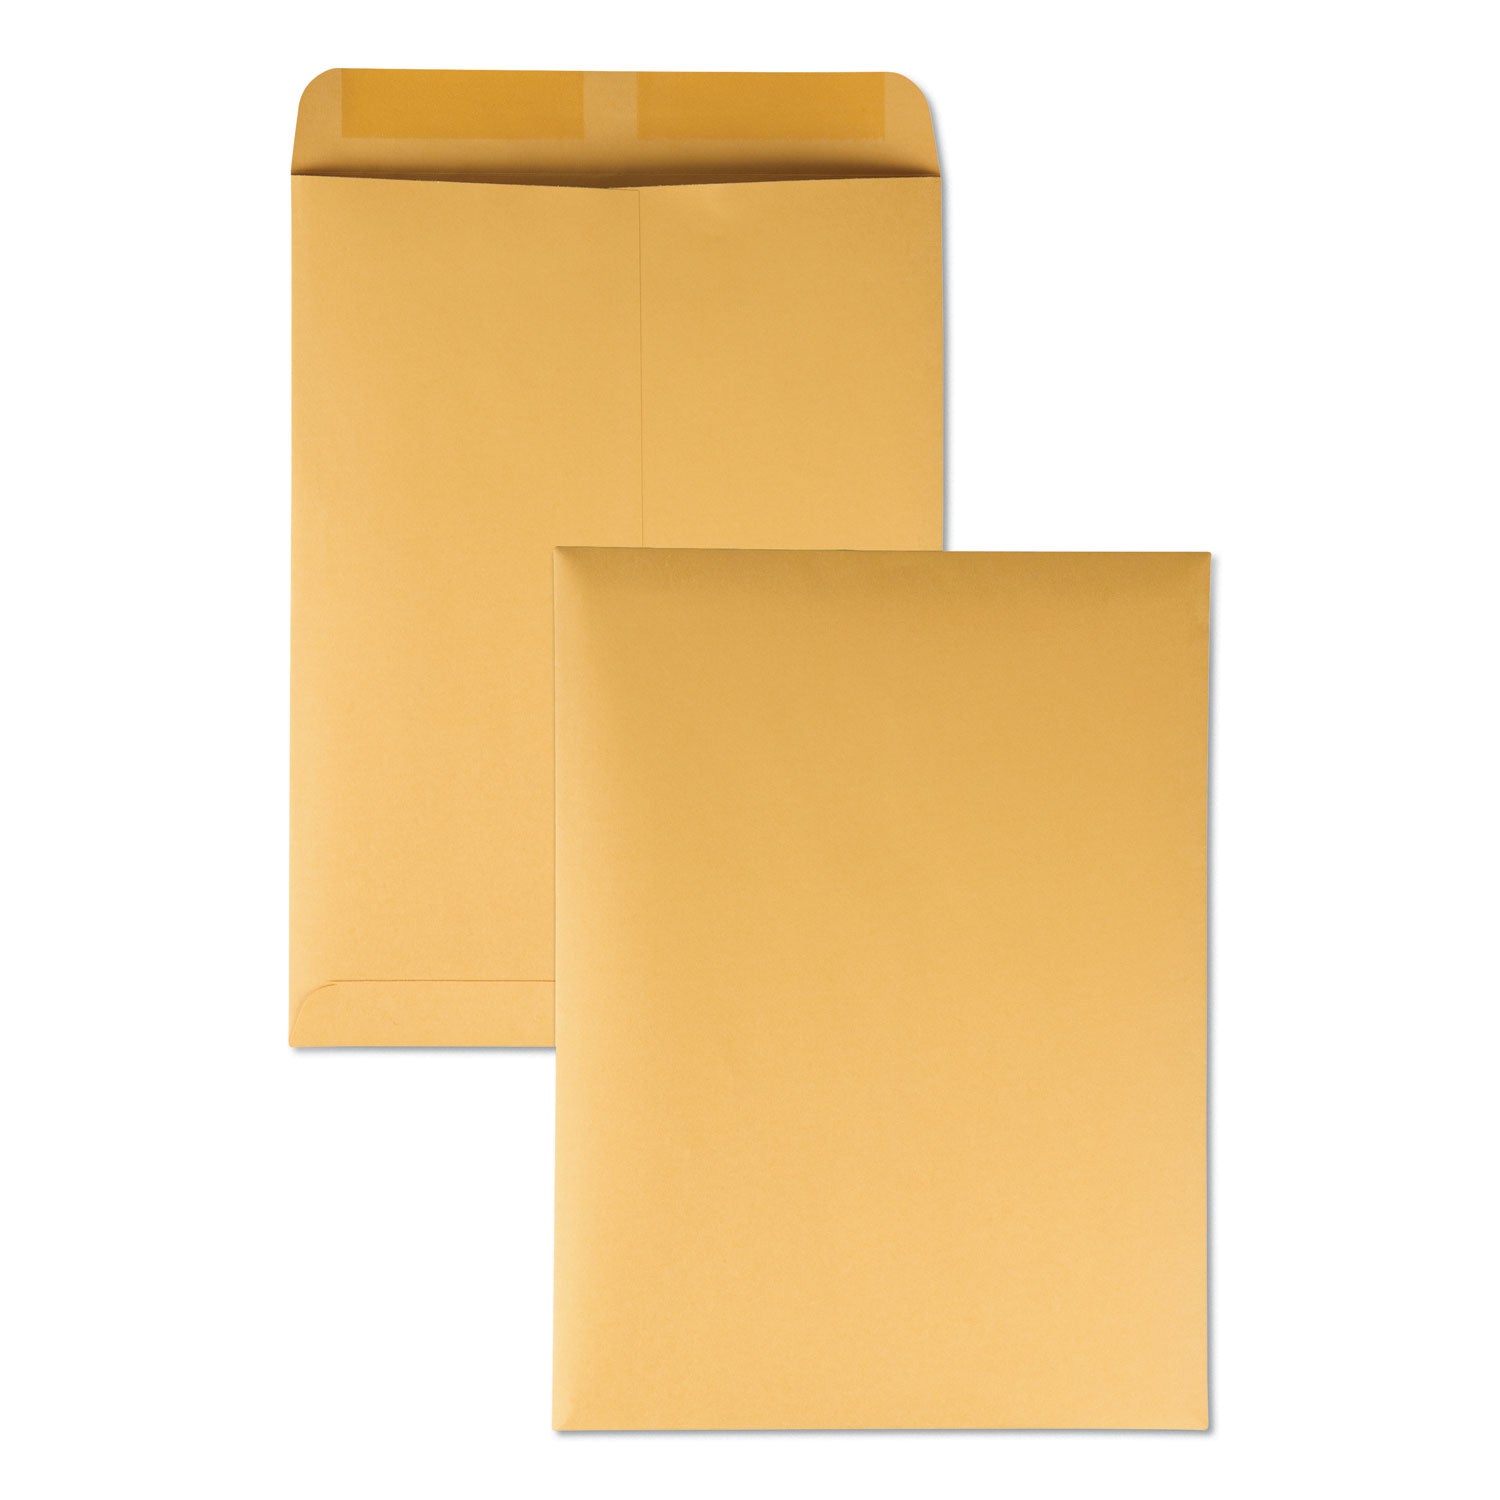 Catalog Envelope, 20 lb Bond Weight Kraft, #10 1/2, Square Flap, Gummed Closure, 9 x 12, Brown Kraft, 250/Box - 